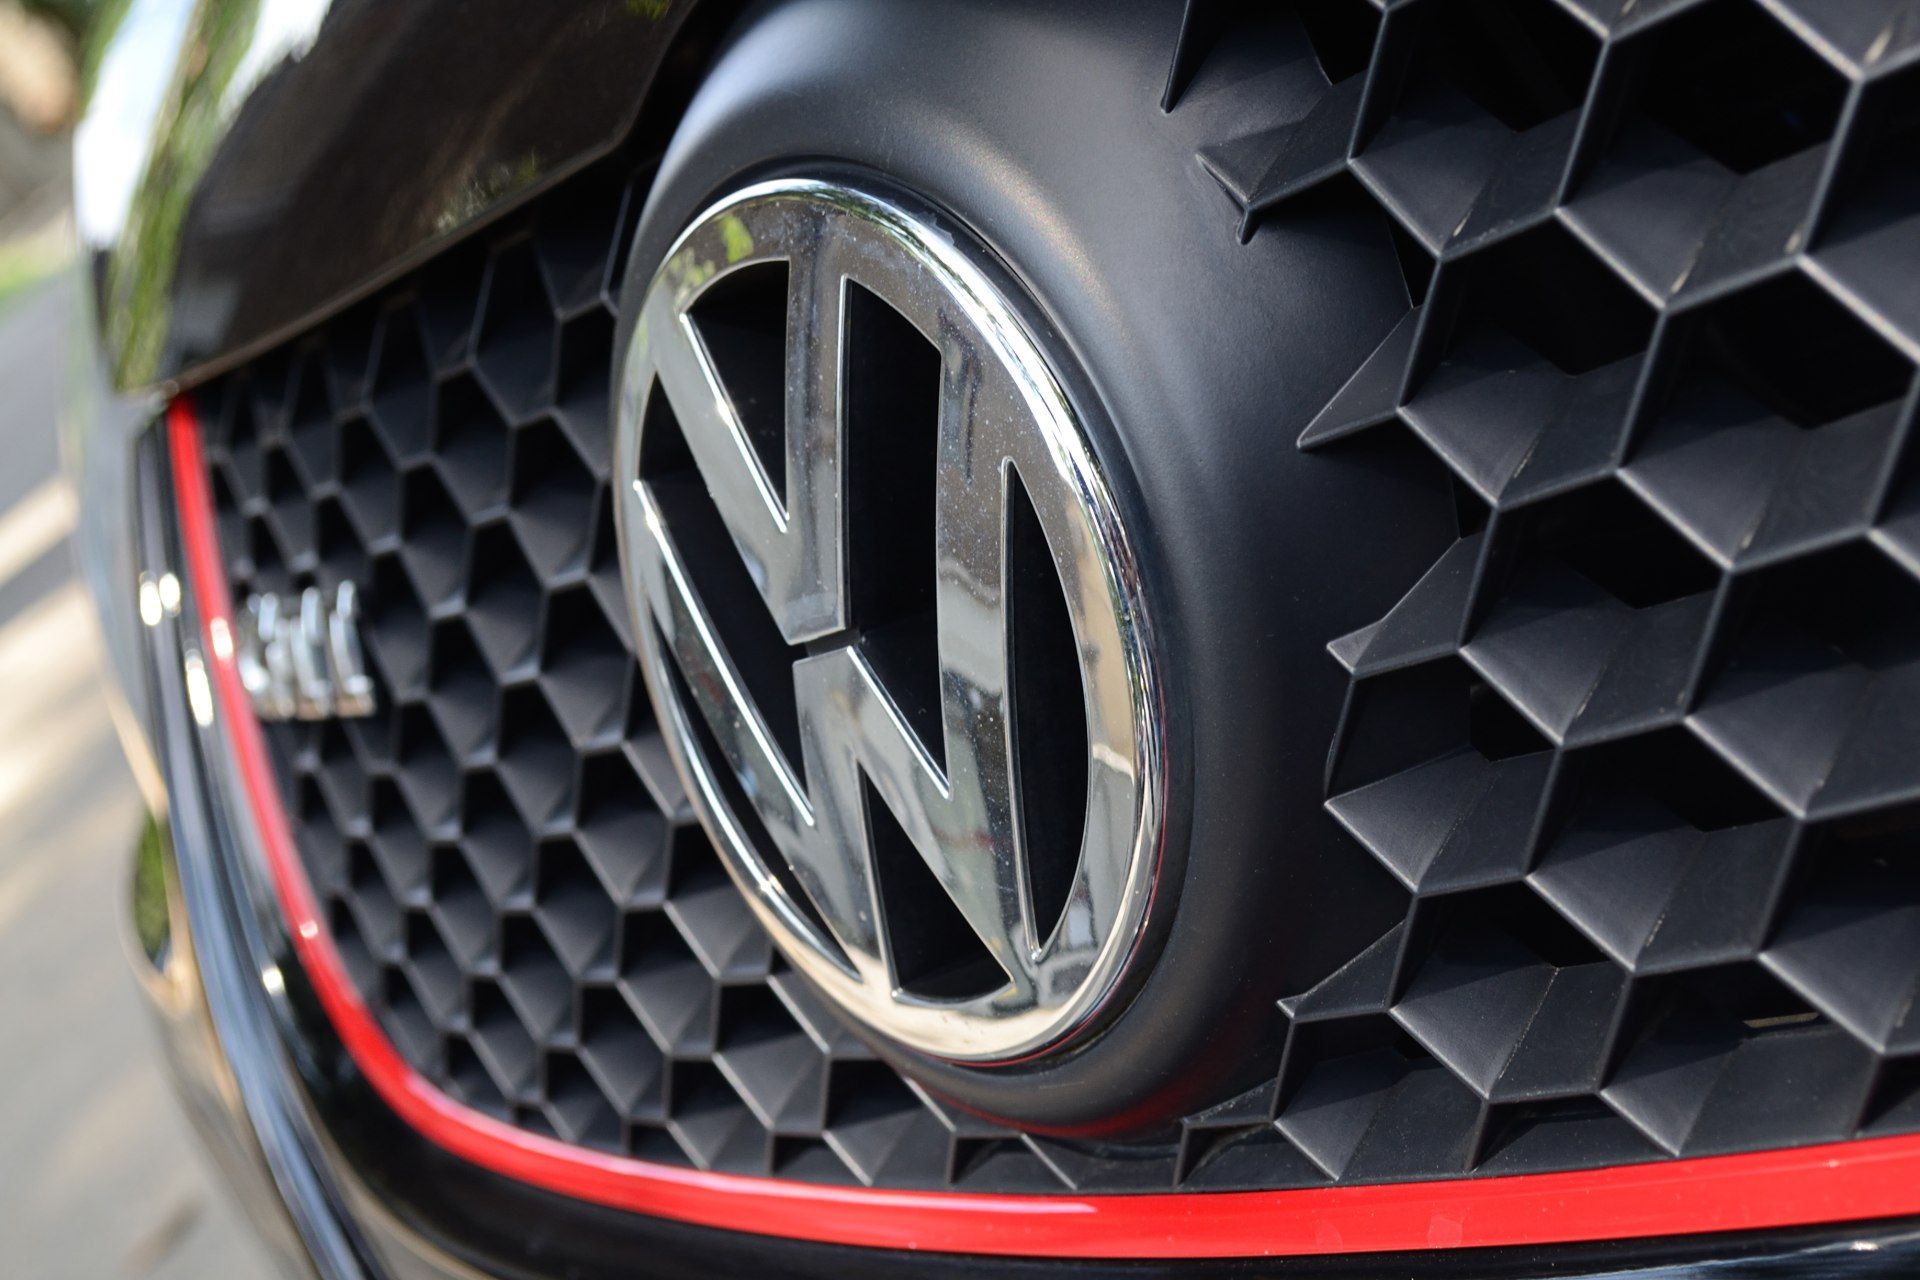 Volkswagen logo on black-and-red car grille - Volkswagen dieselgate